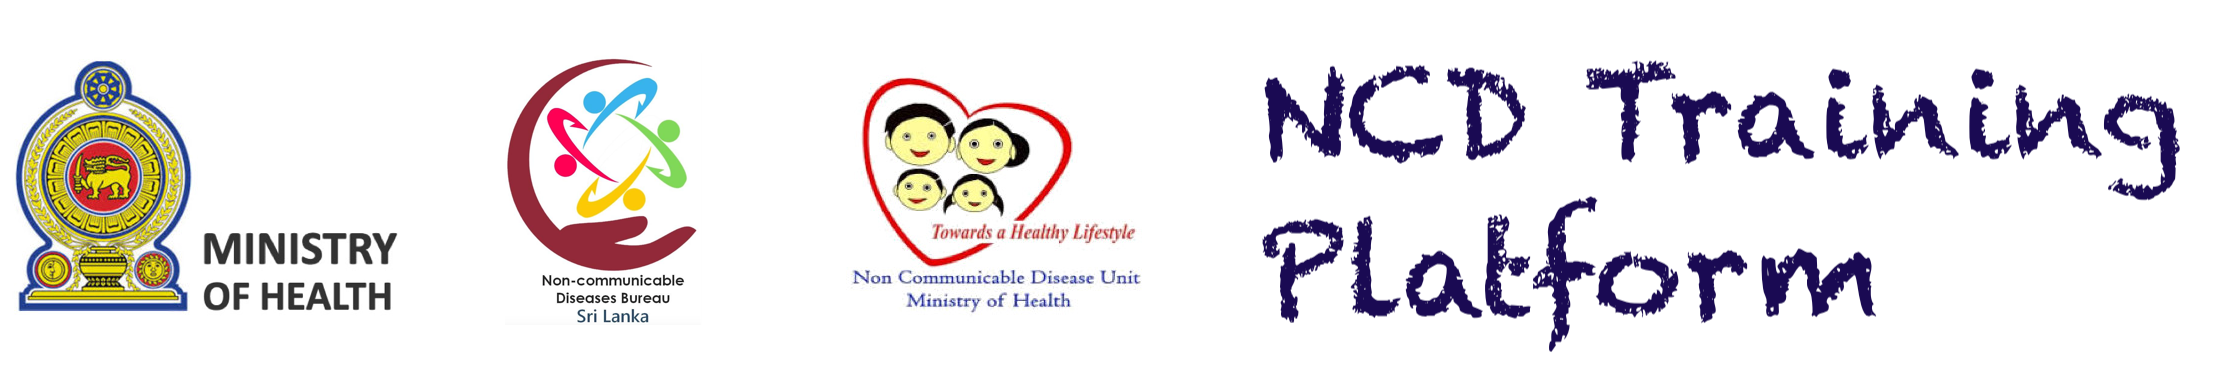 NCD Training Platform of the Ministry of Health - Sri Lanka